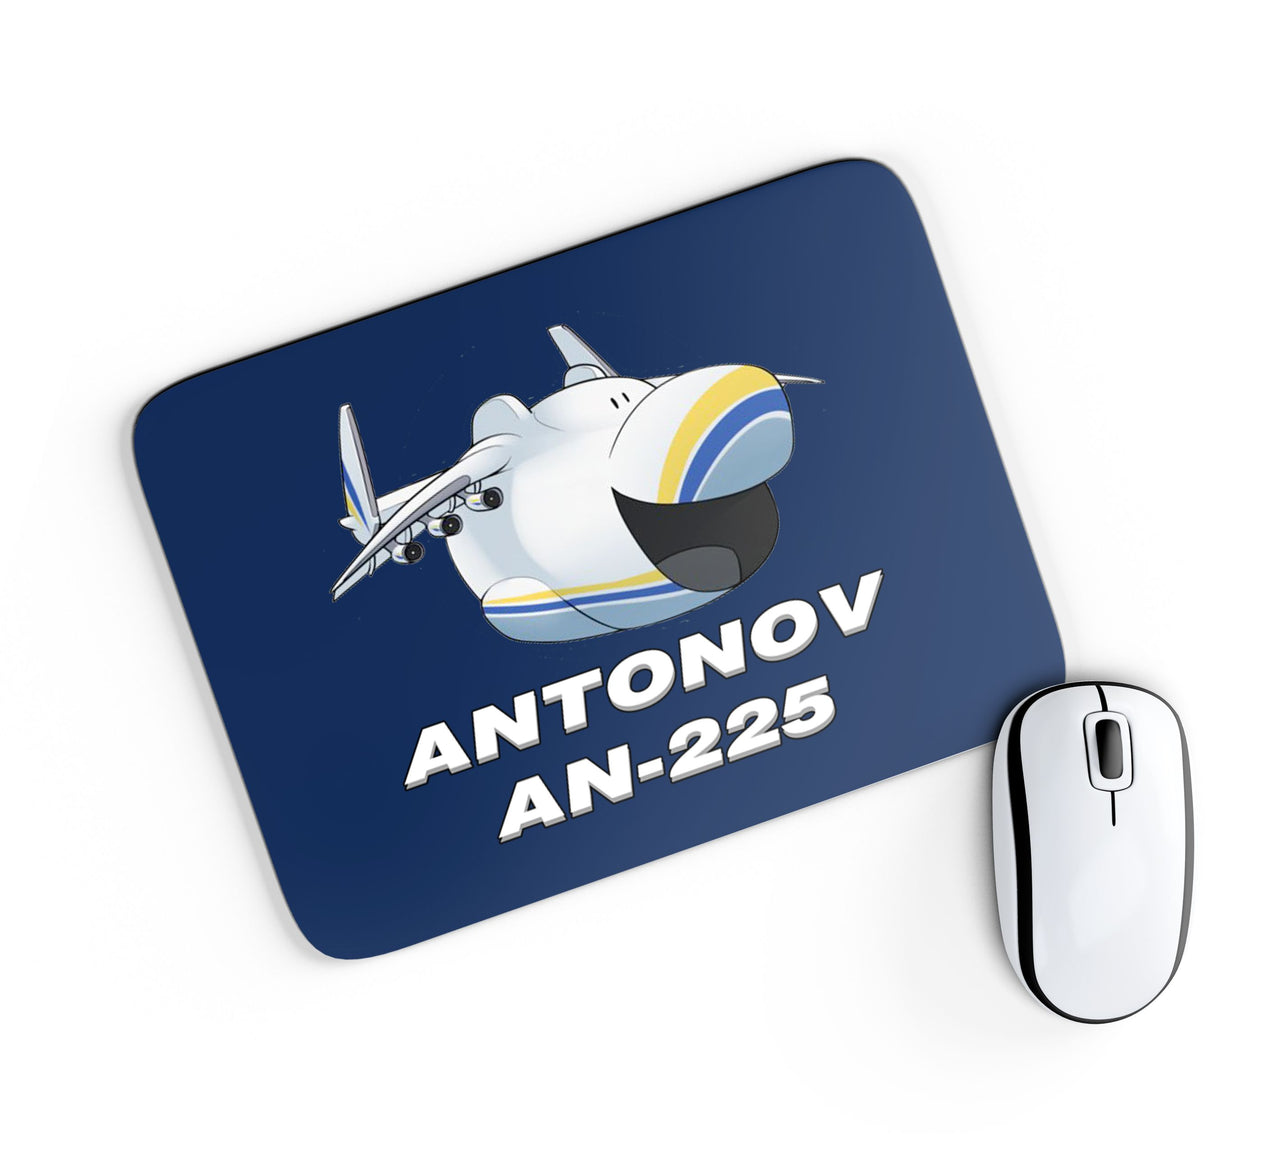 Antonov AN-225 (23) Designed Mouse Pads